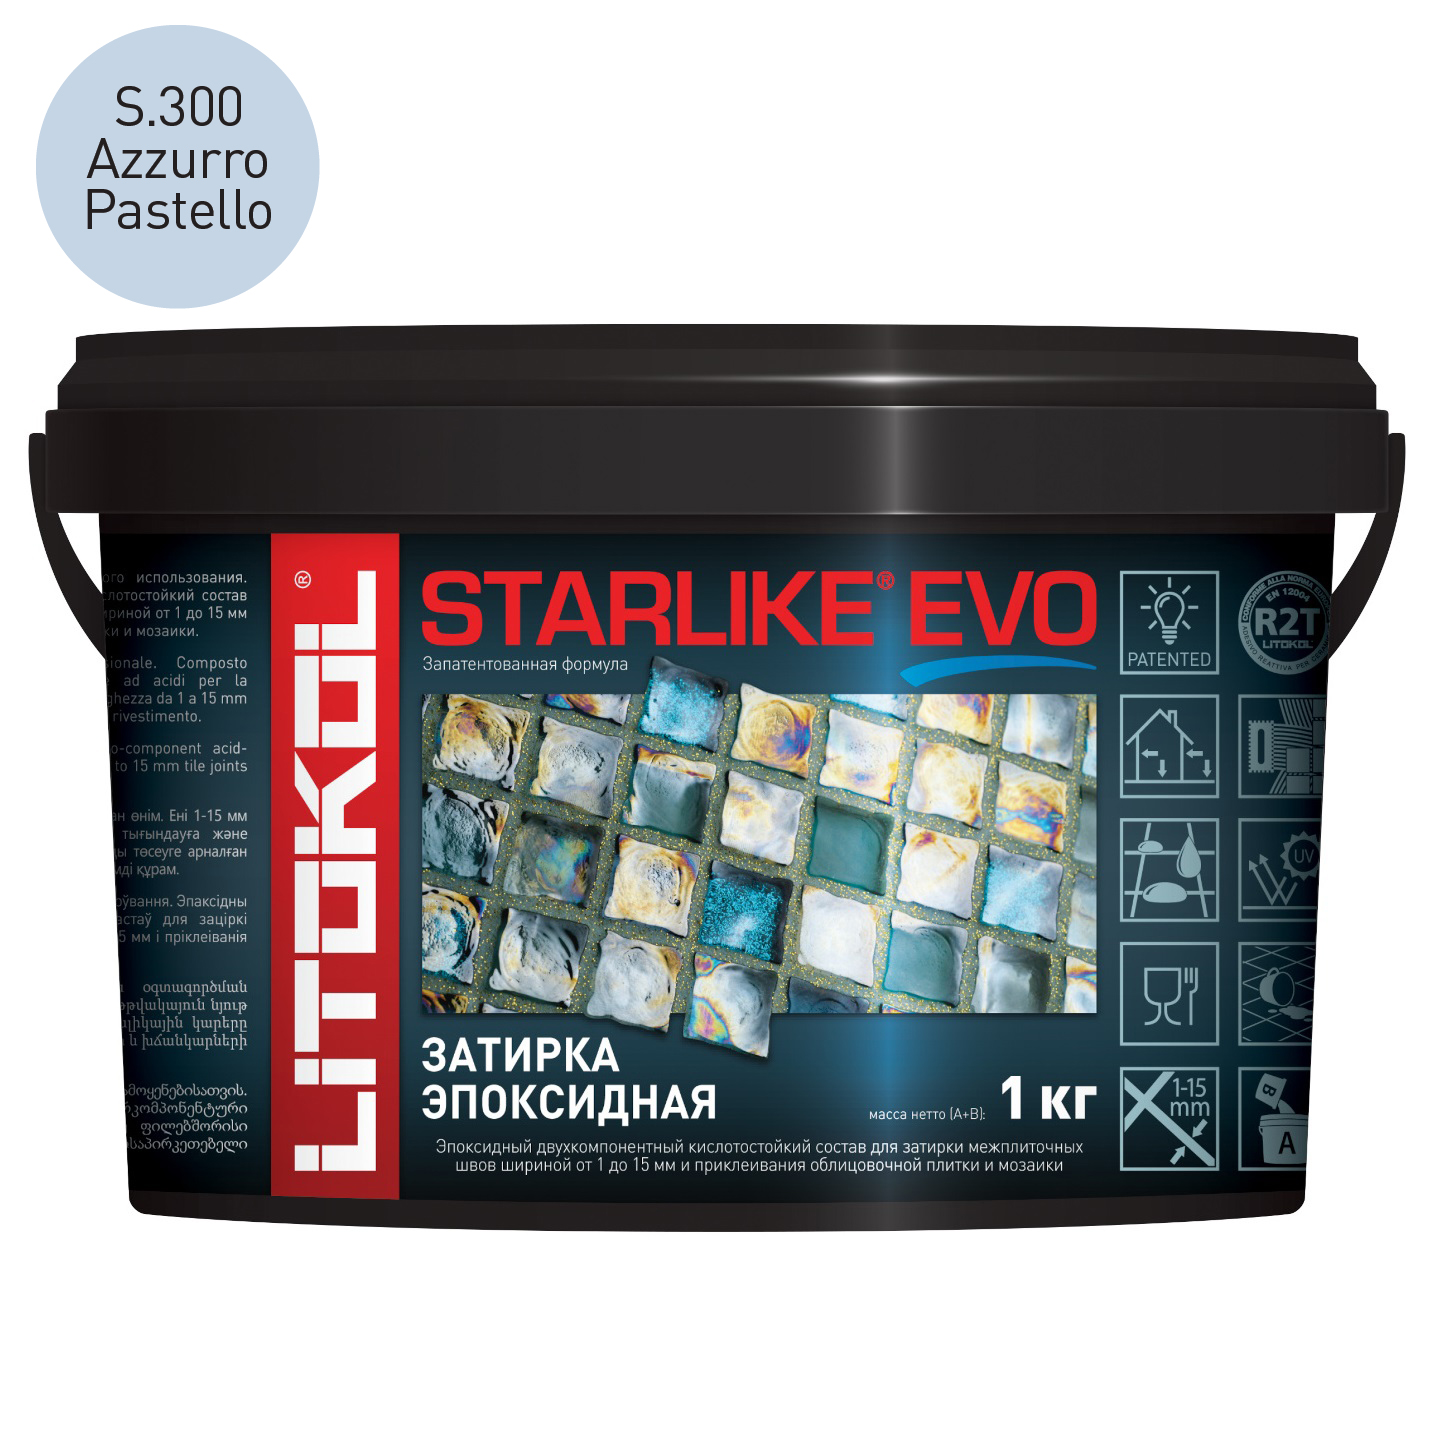 Затирка эпоксидная Litokol Starlike Evo S.300 Azzurro Pastello (1 кг.)